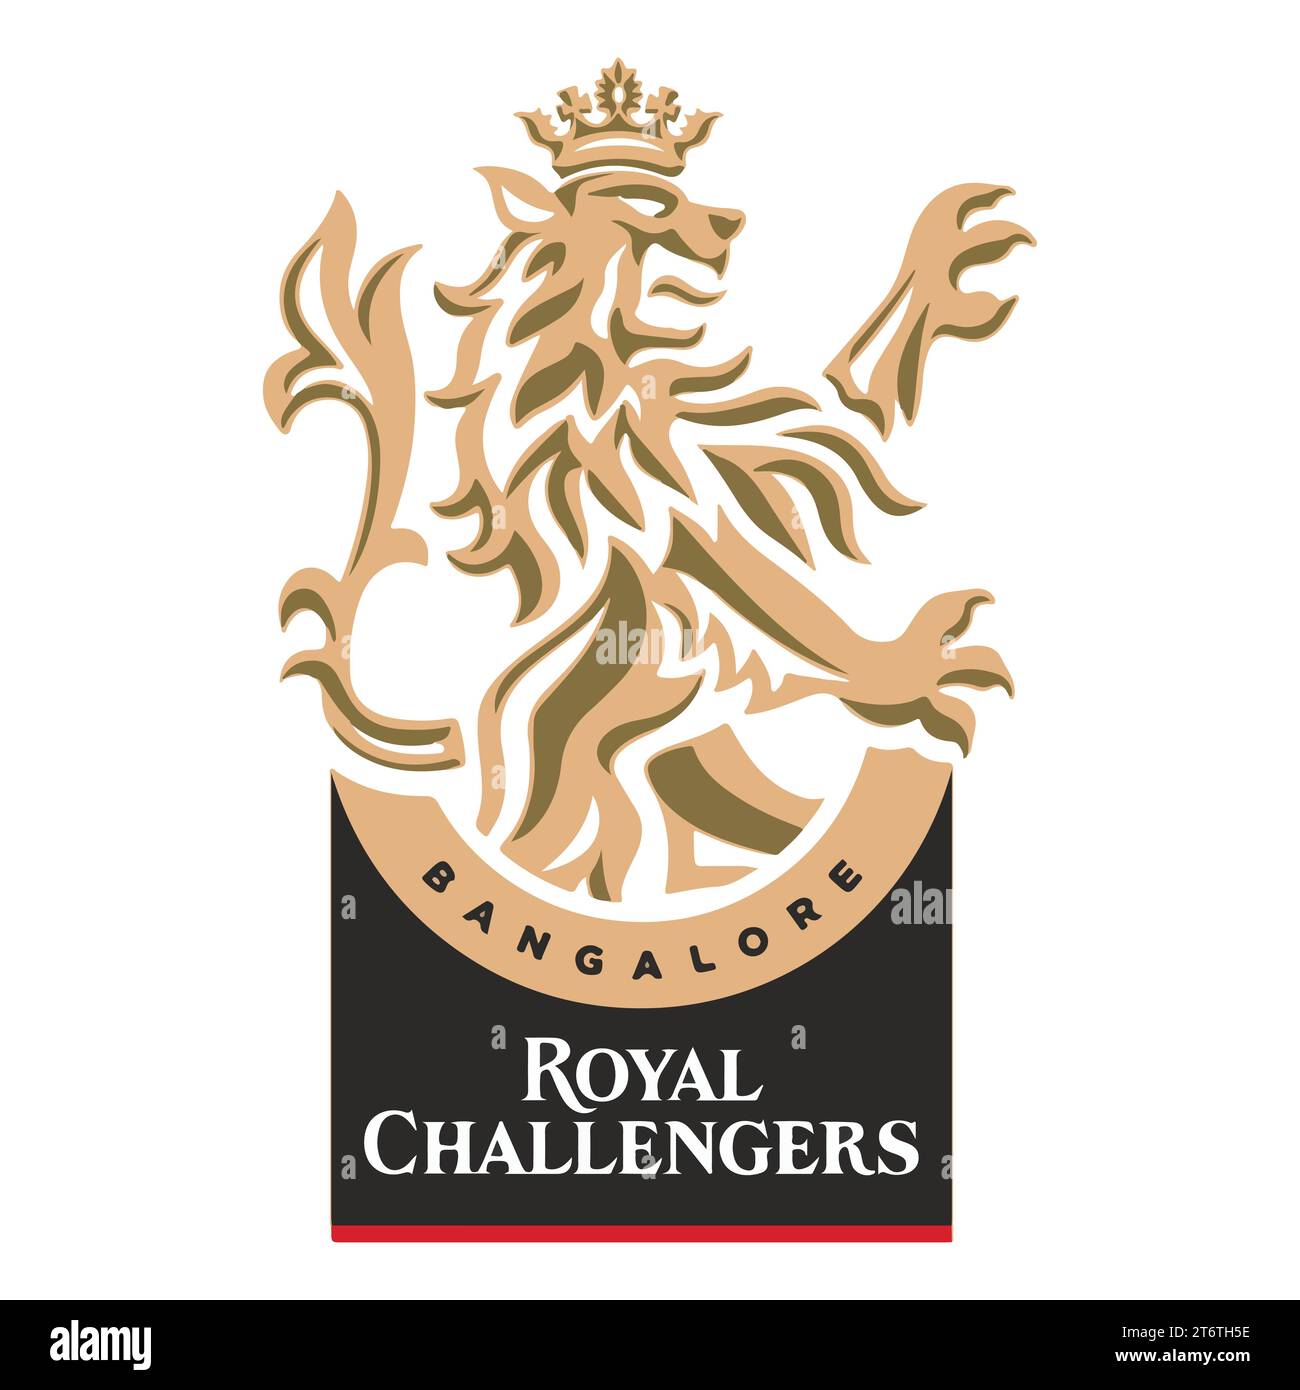 Royal Challengers Bangalore Logo indischer professioneller Cricket Club, Vektor-Illustration abstraktes bearbeitbares Bild Stock Vektor